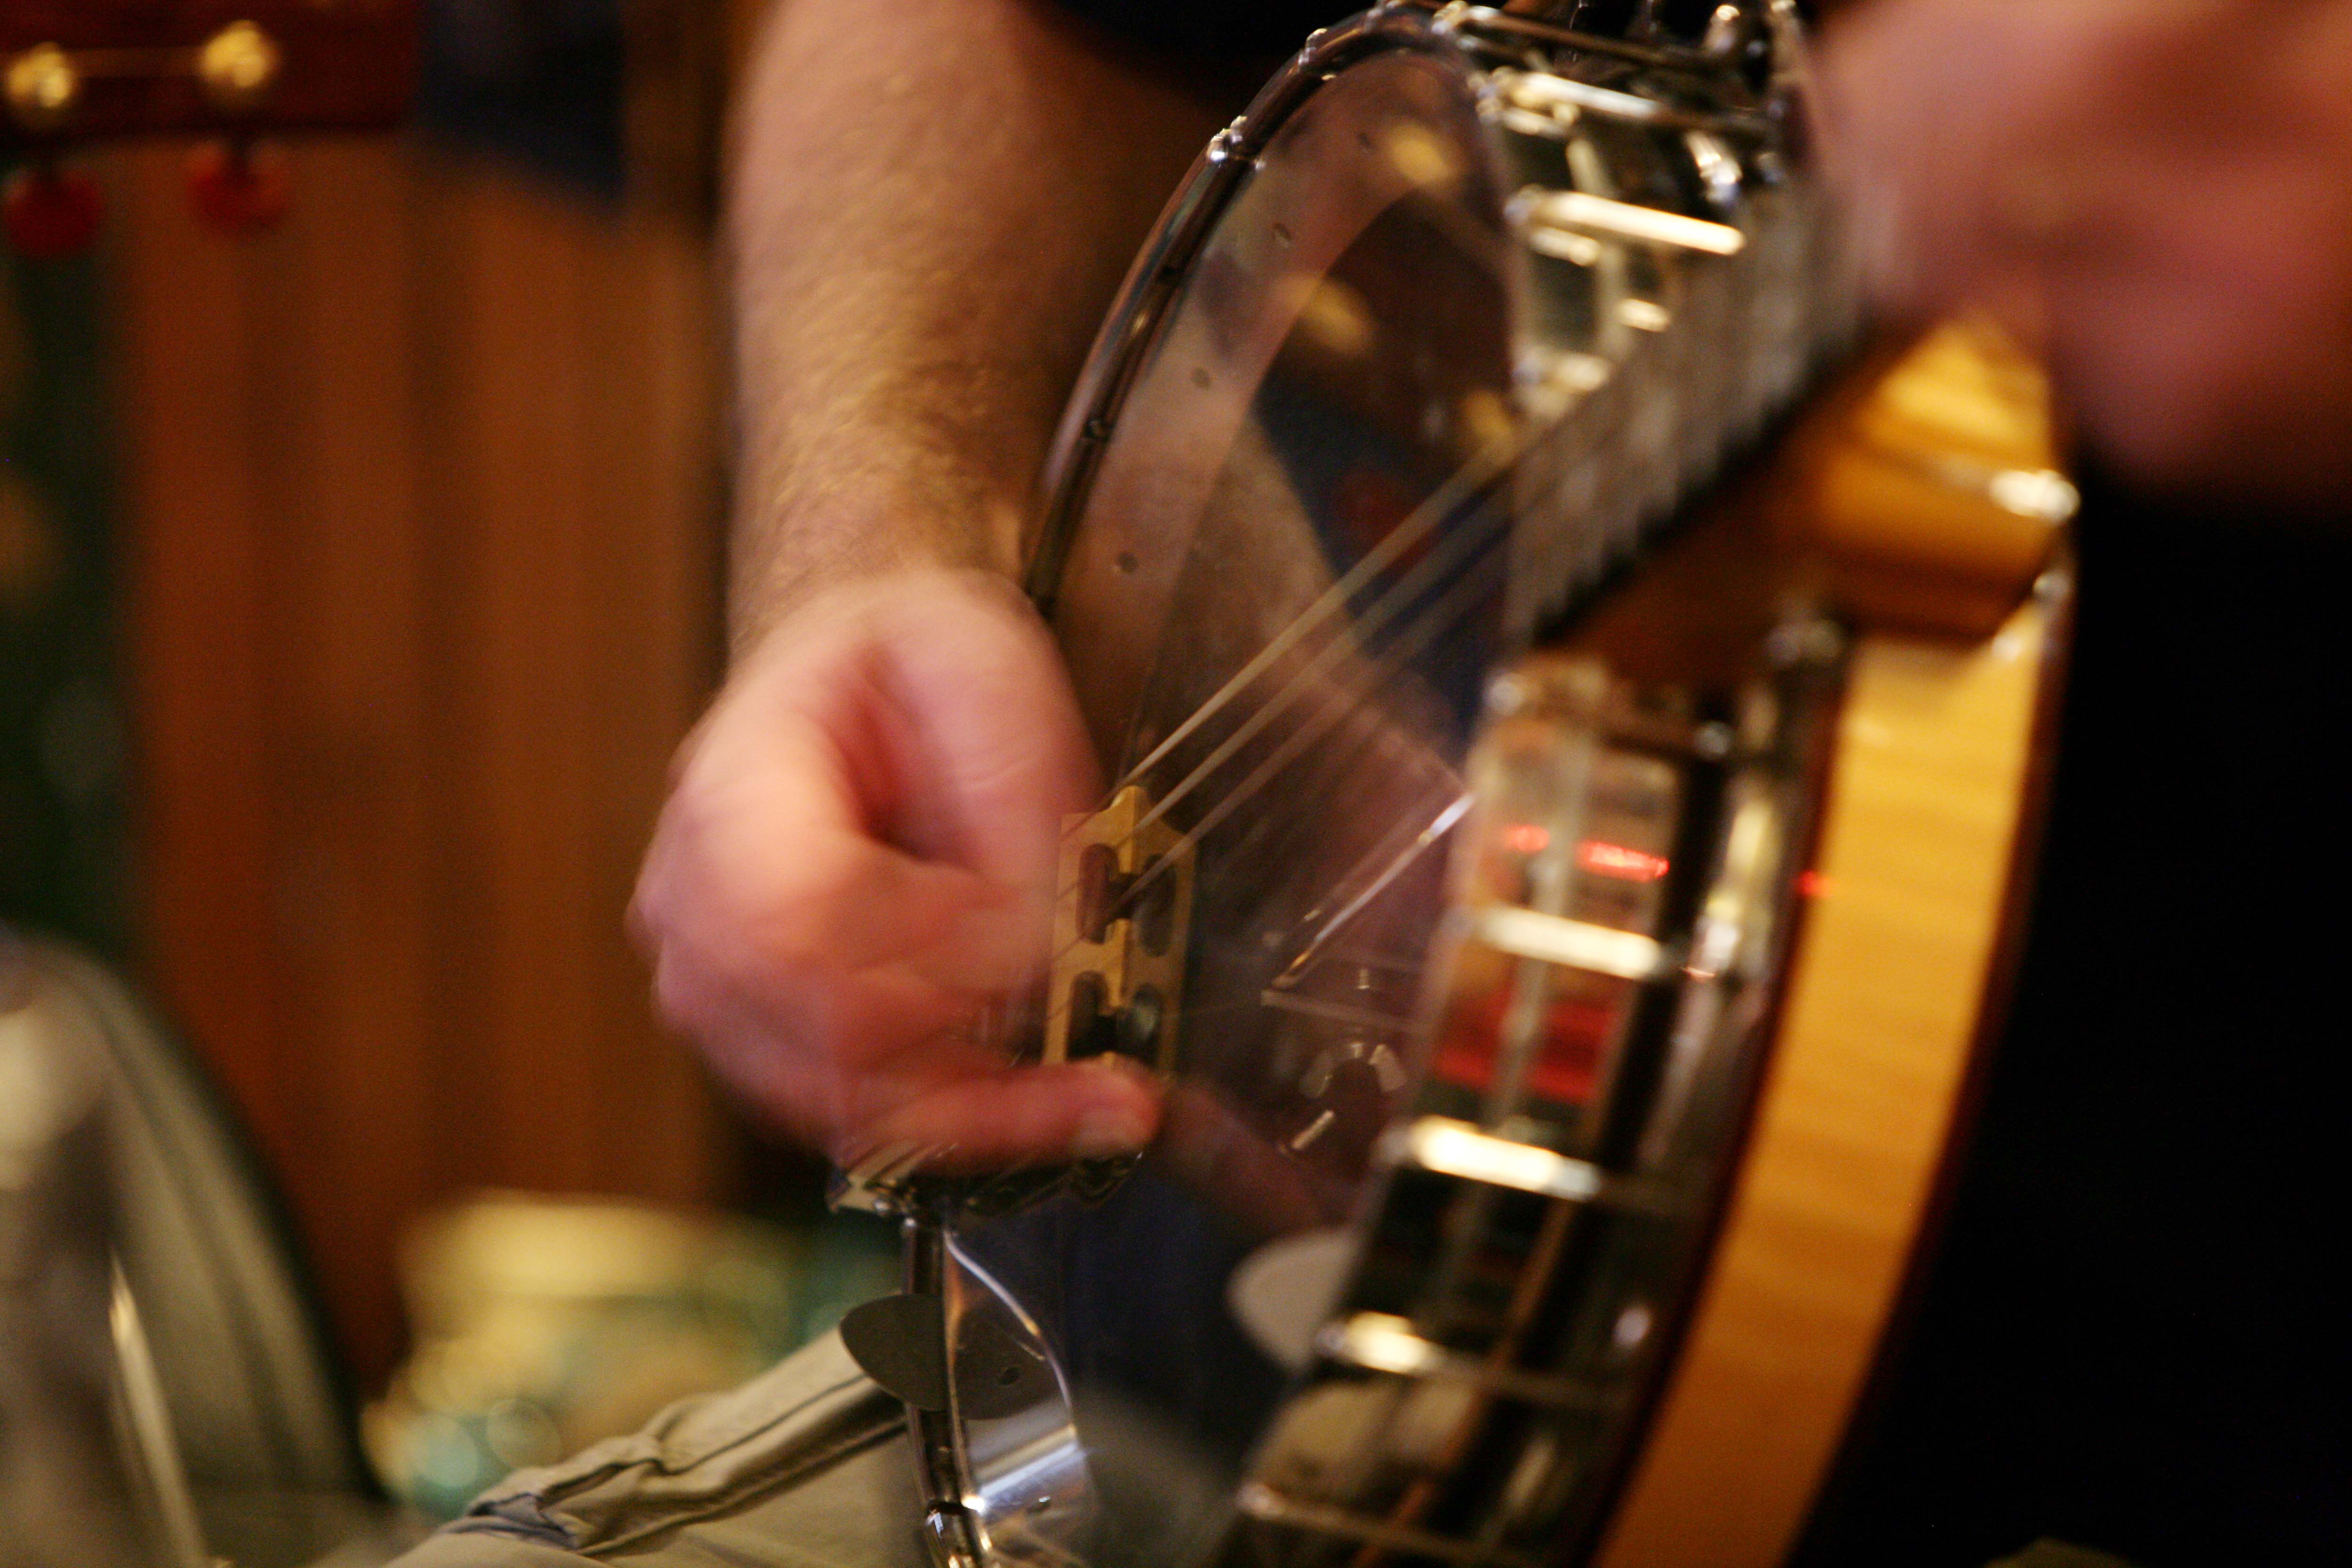 A traditional Irish musician playing banjo.